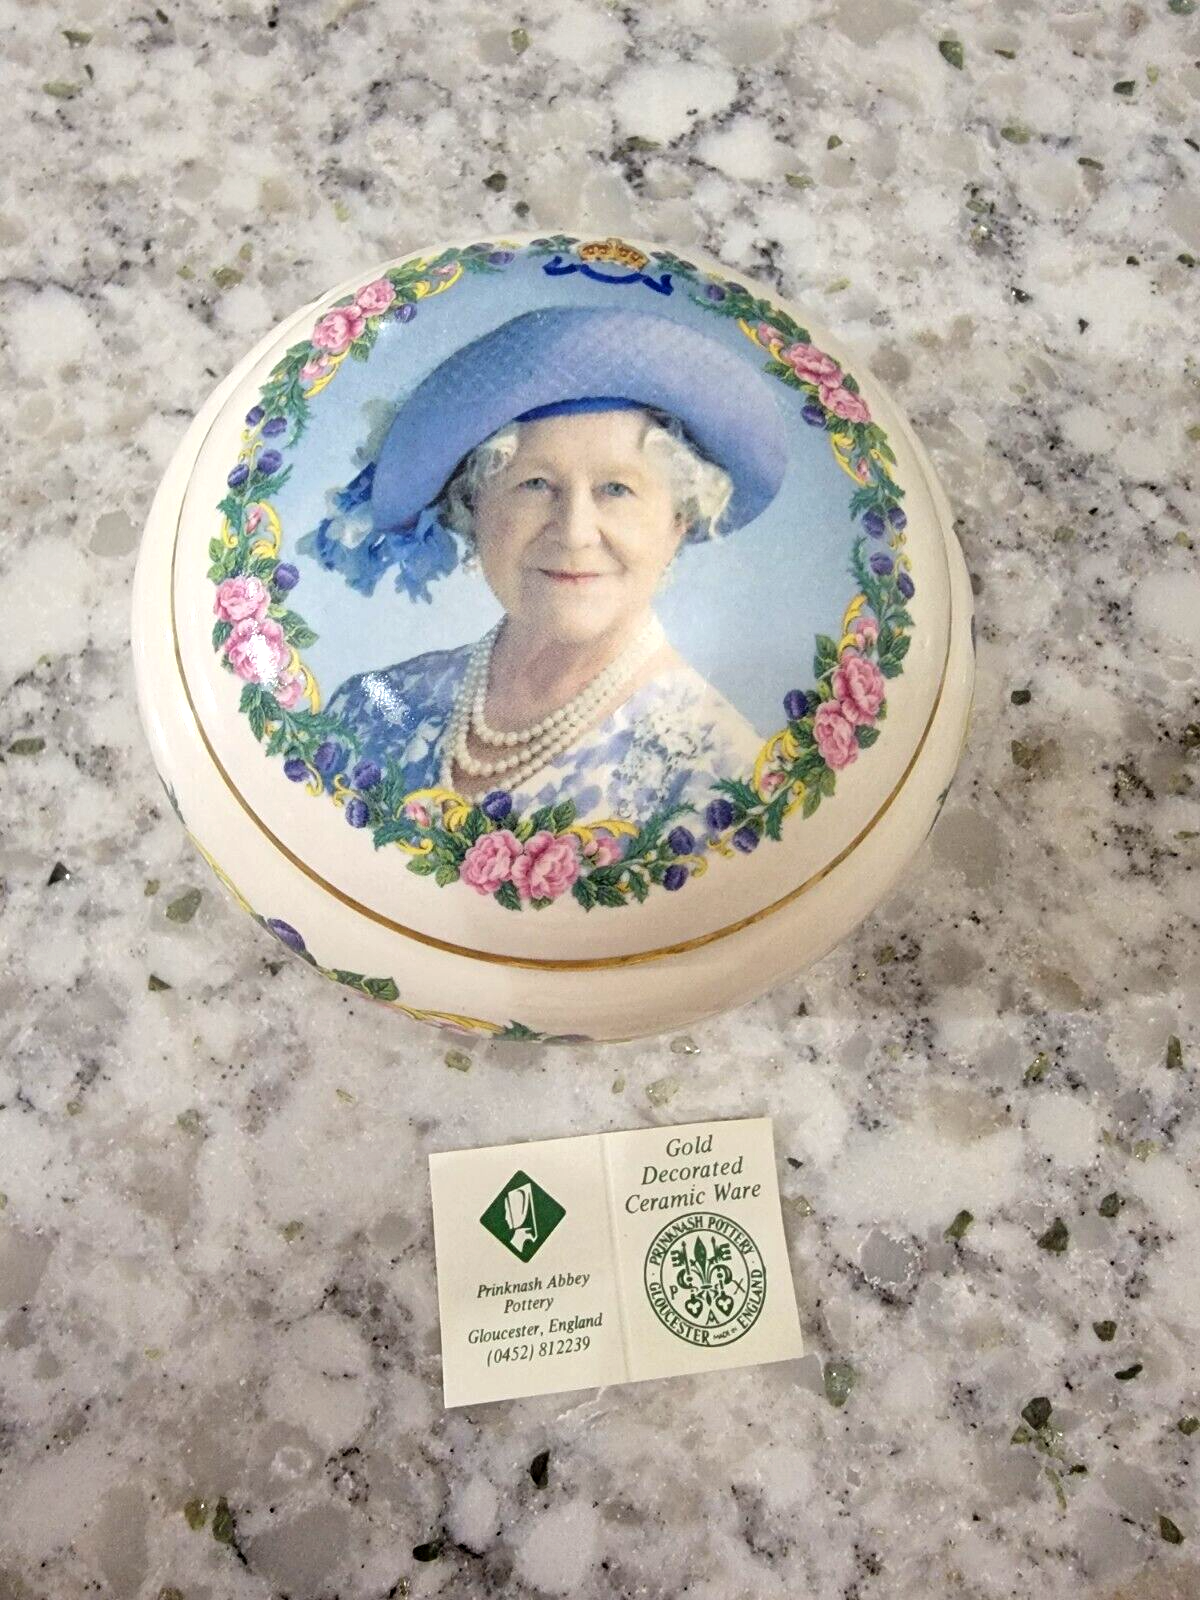 Queen Elizabeth Abbey Pottery Commemorate 100th Bday Dish 2000 24K Gold Decor Без бренда